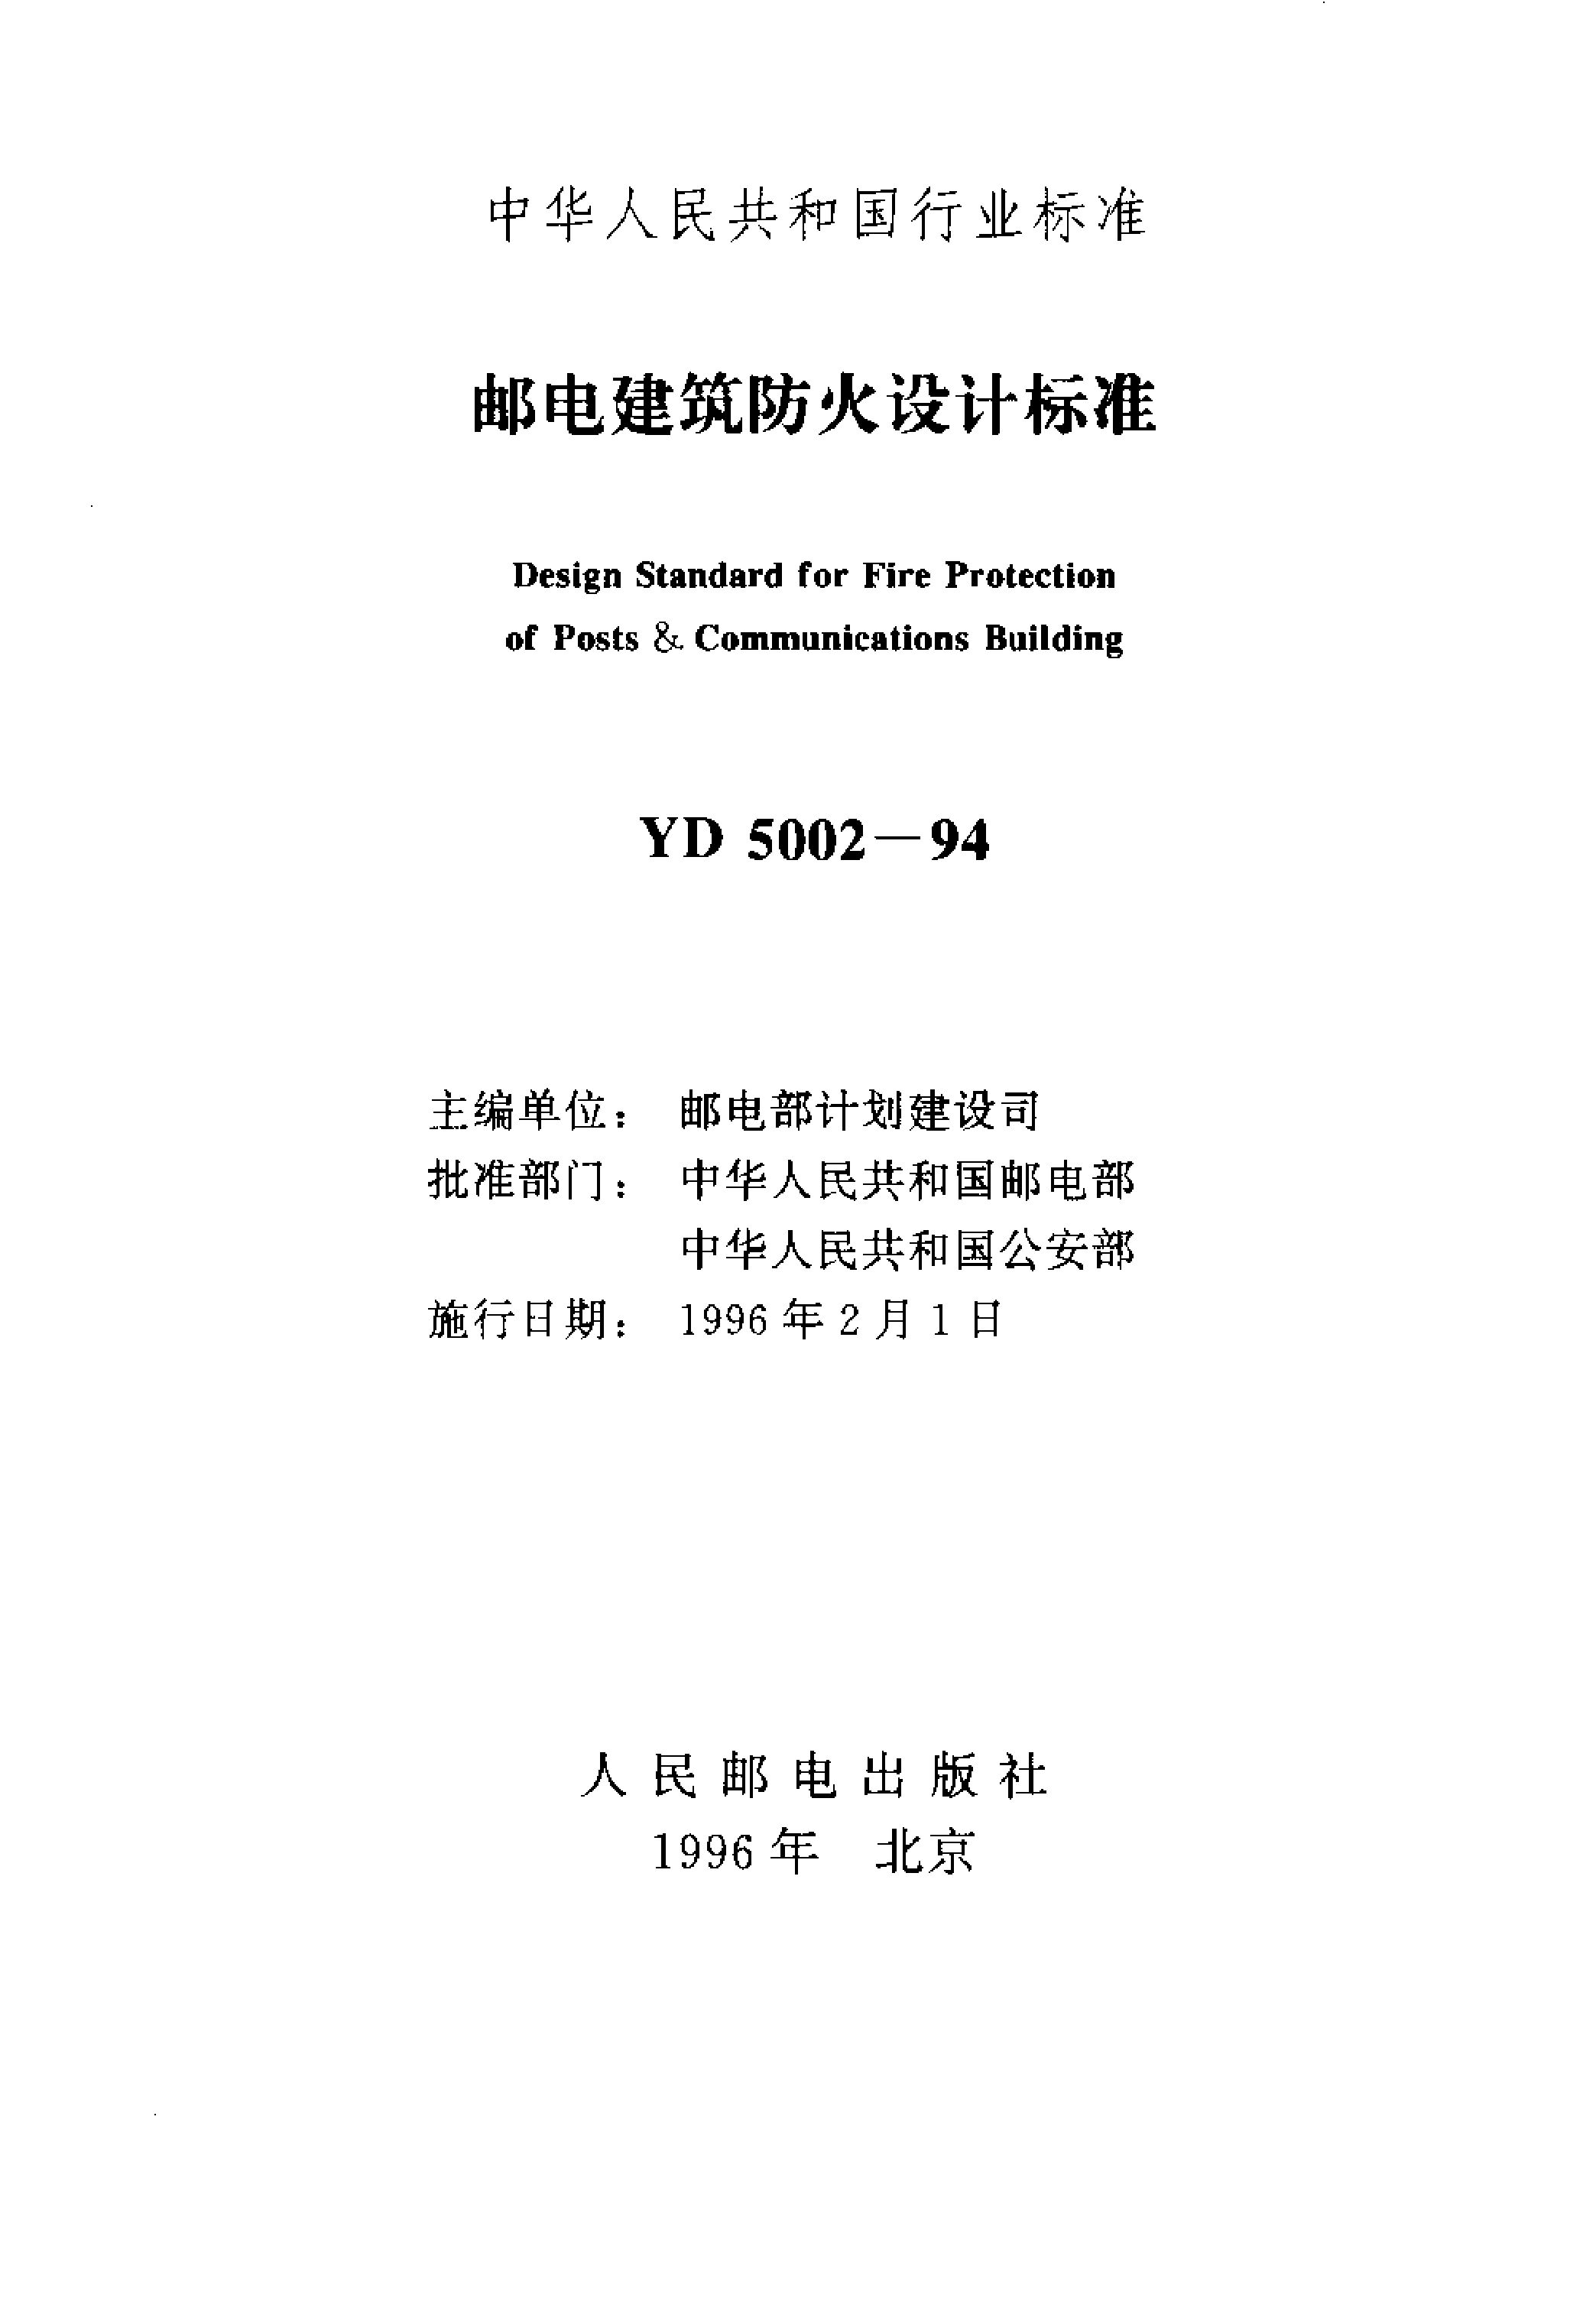 YD 5002-1994封面图